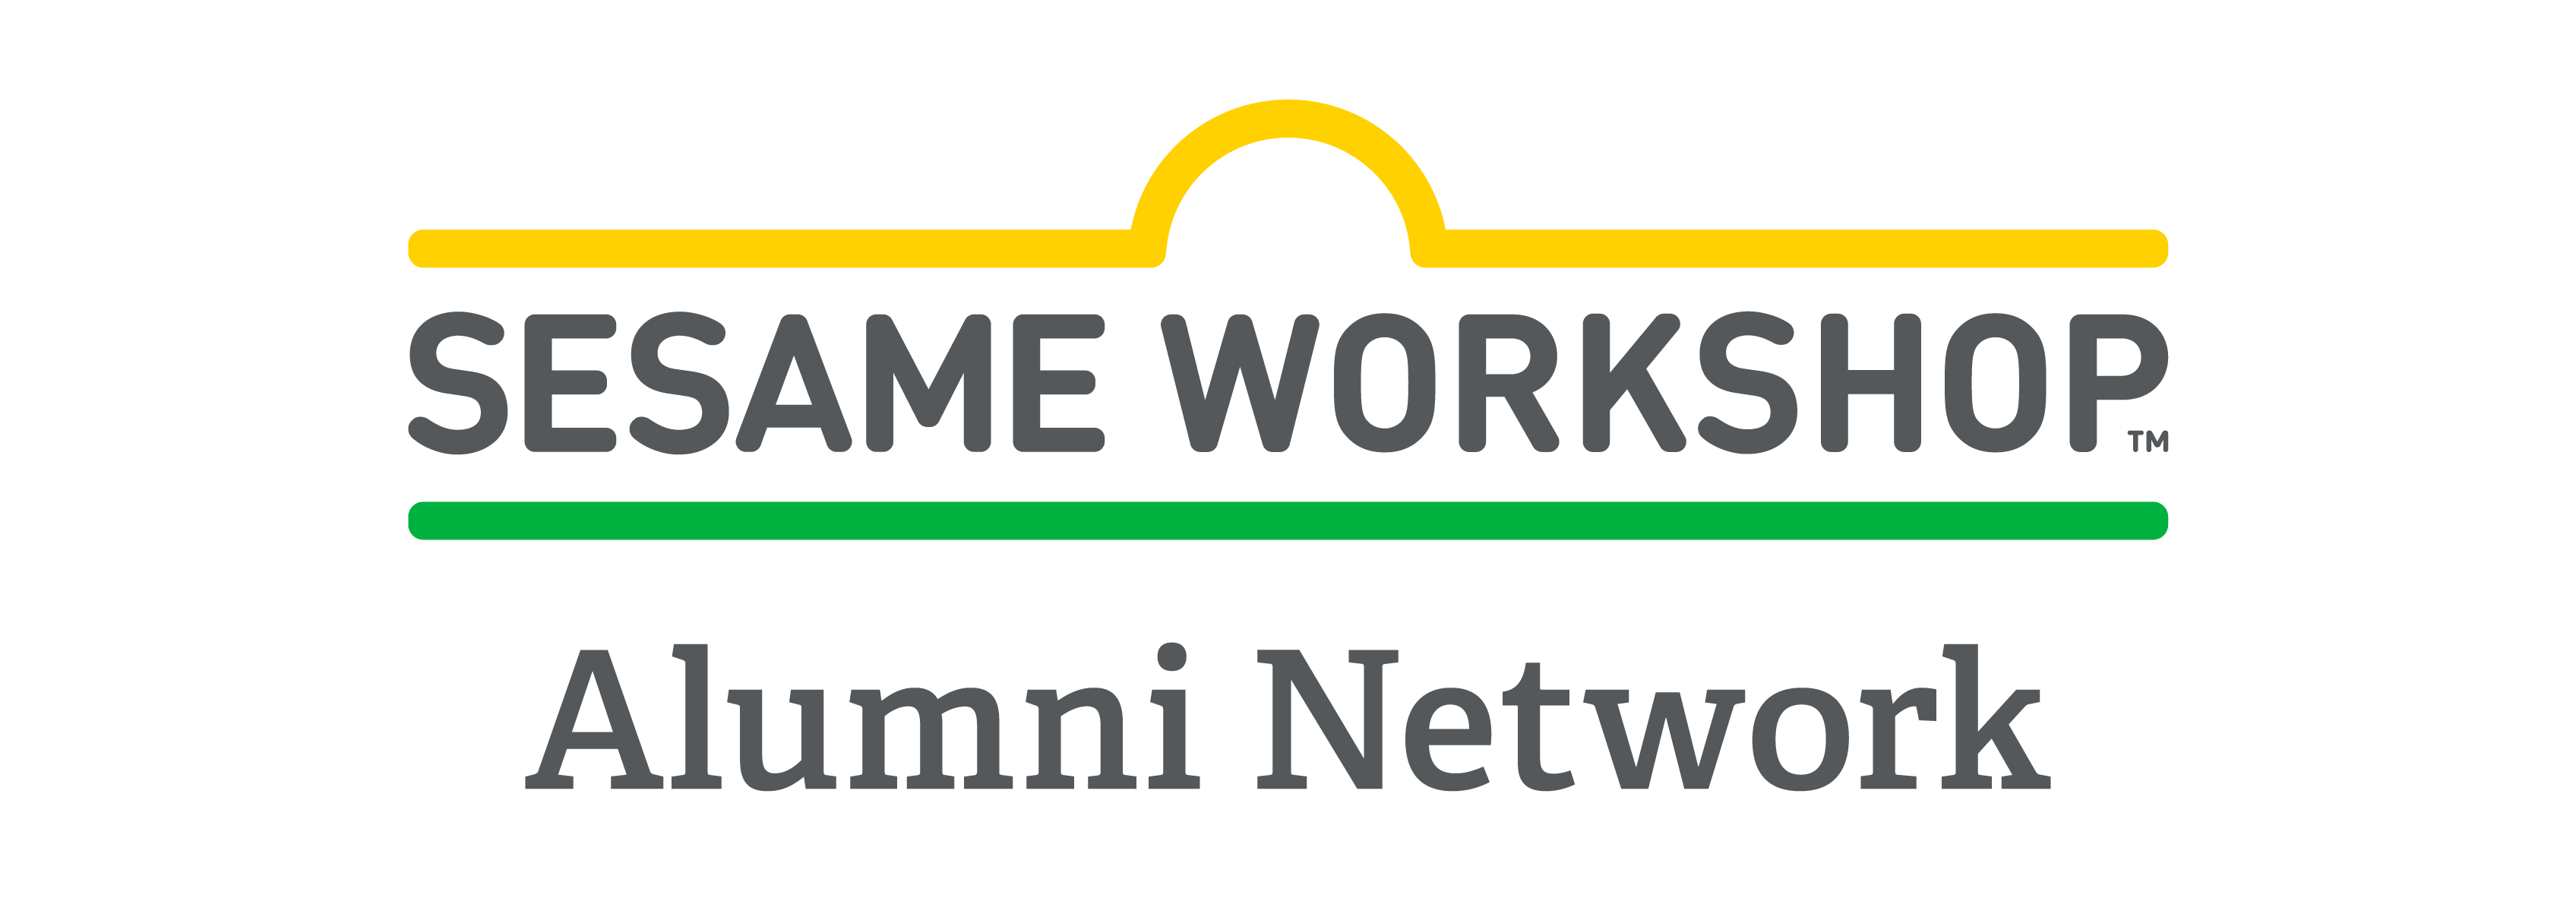 Sesame Workshop Alumni Network